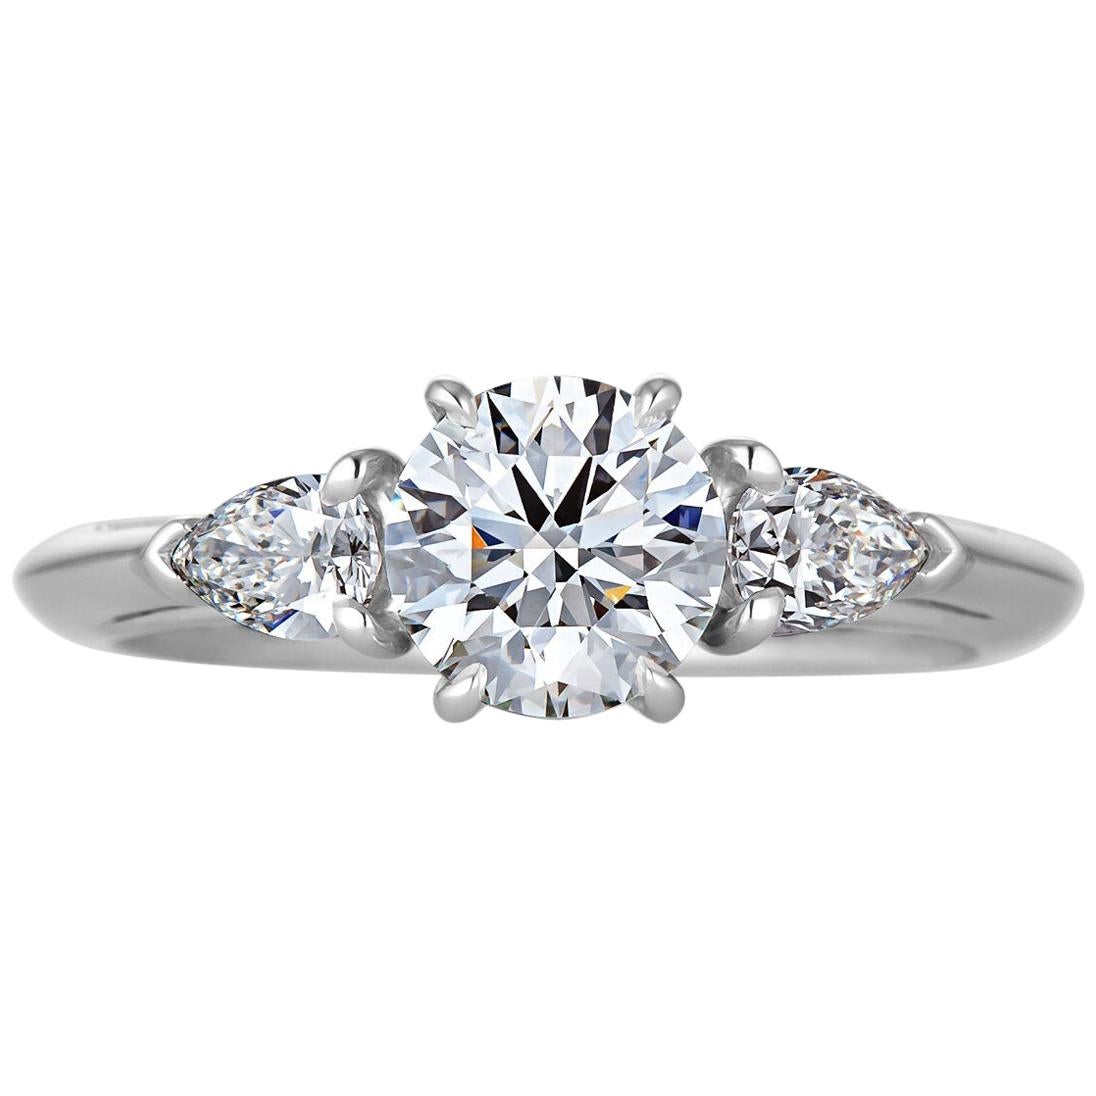 Tiffany & Co. .93 Carat Round Brilliant Cut Diamond Engagement Ring